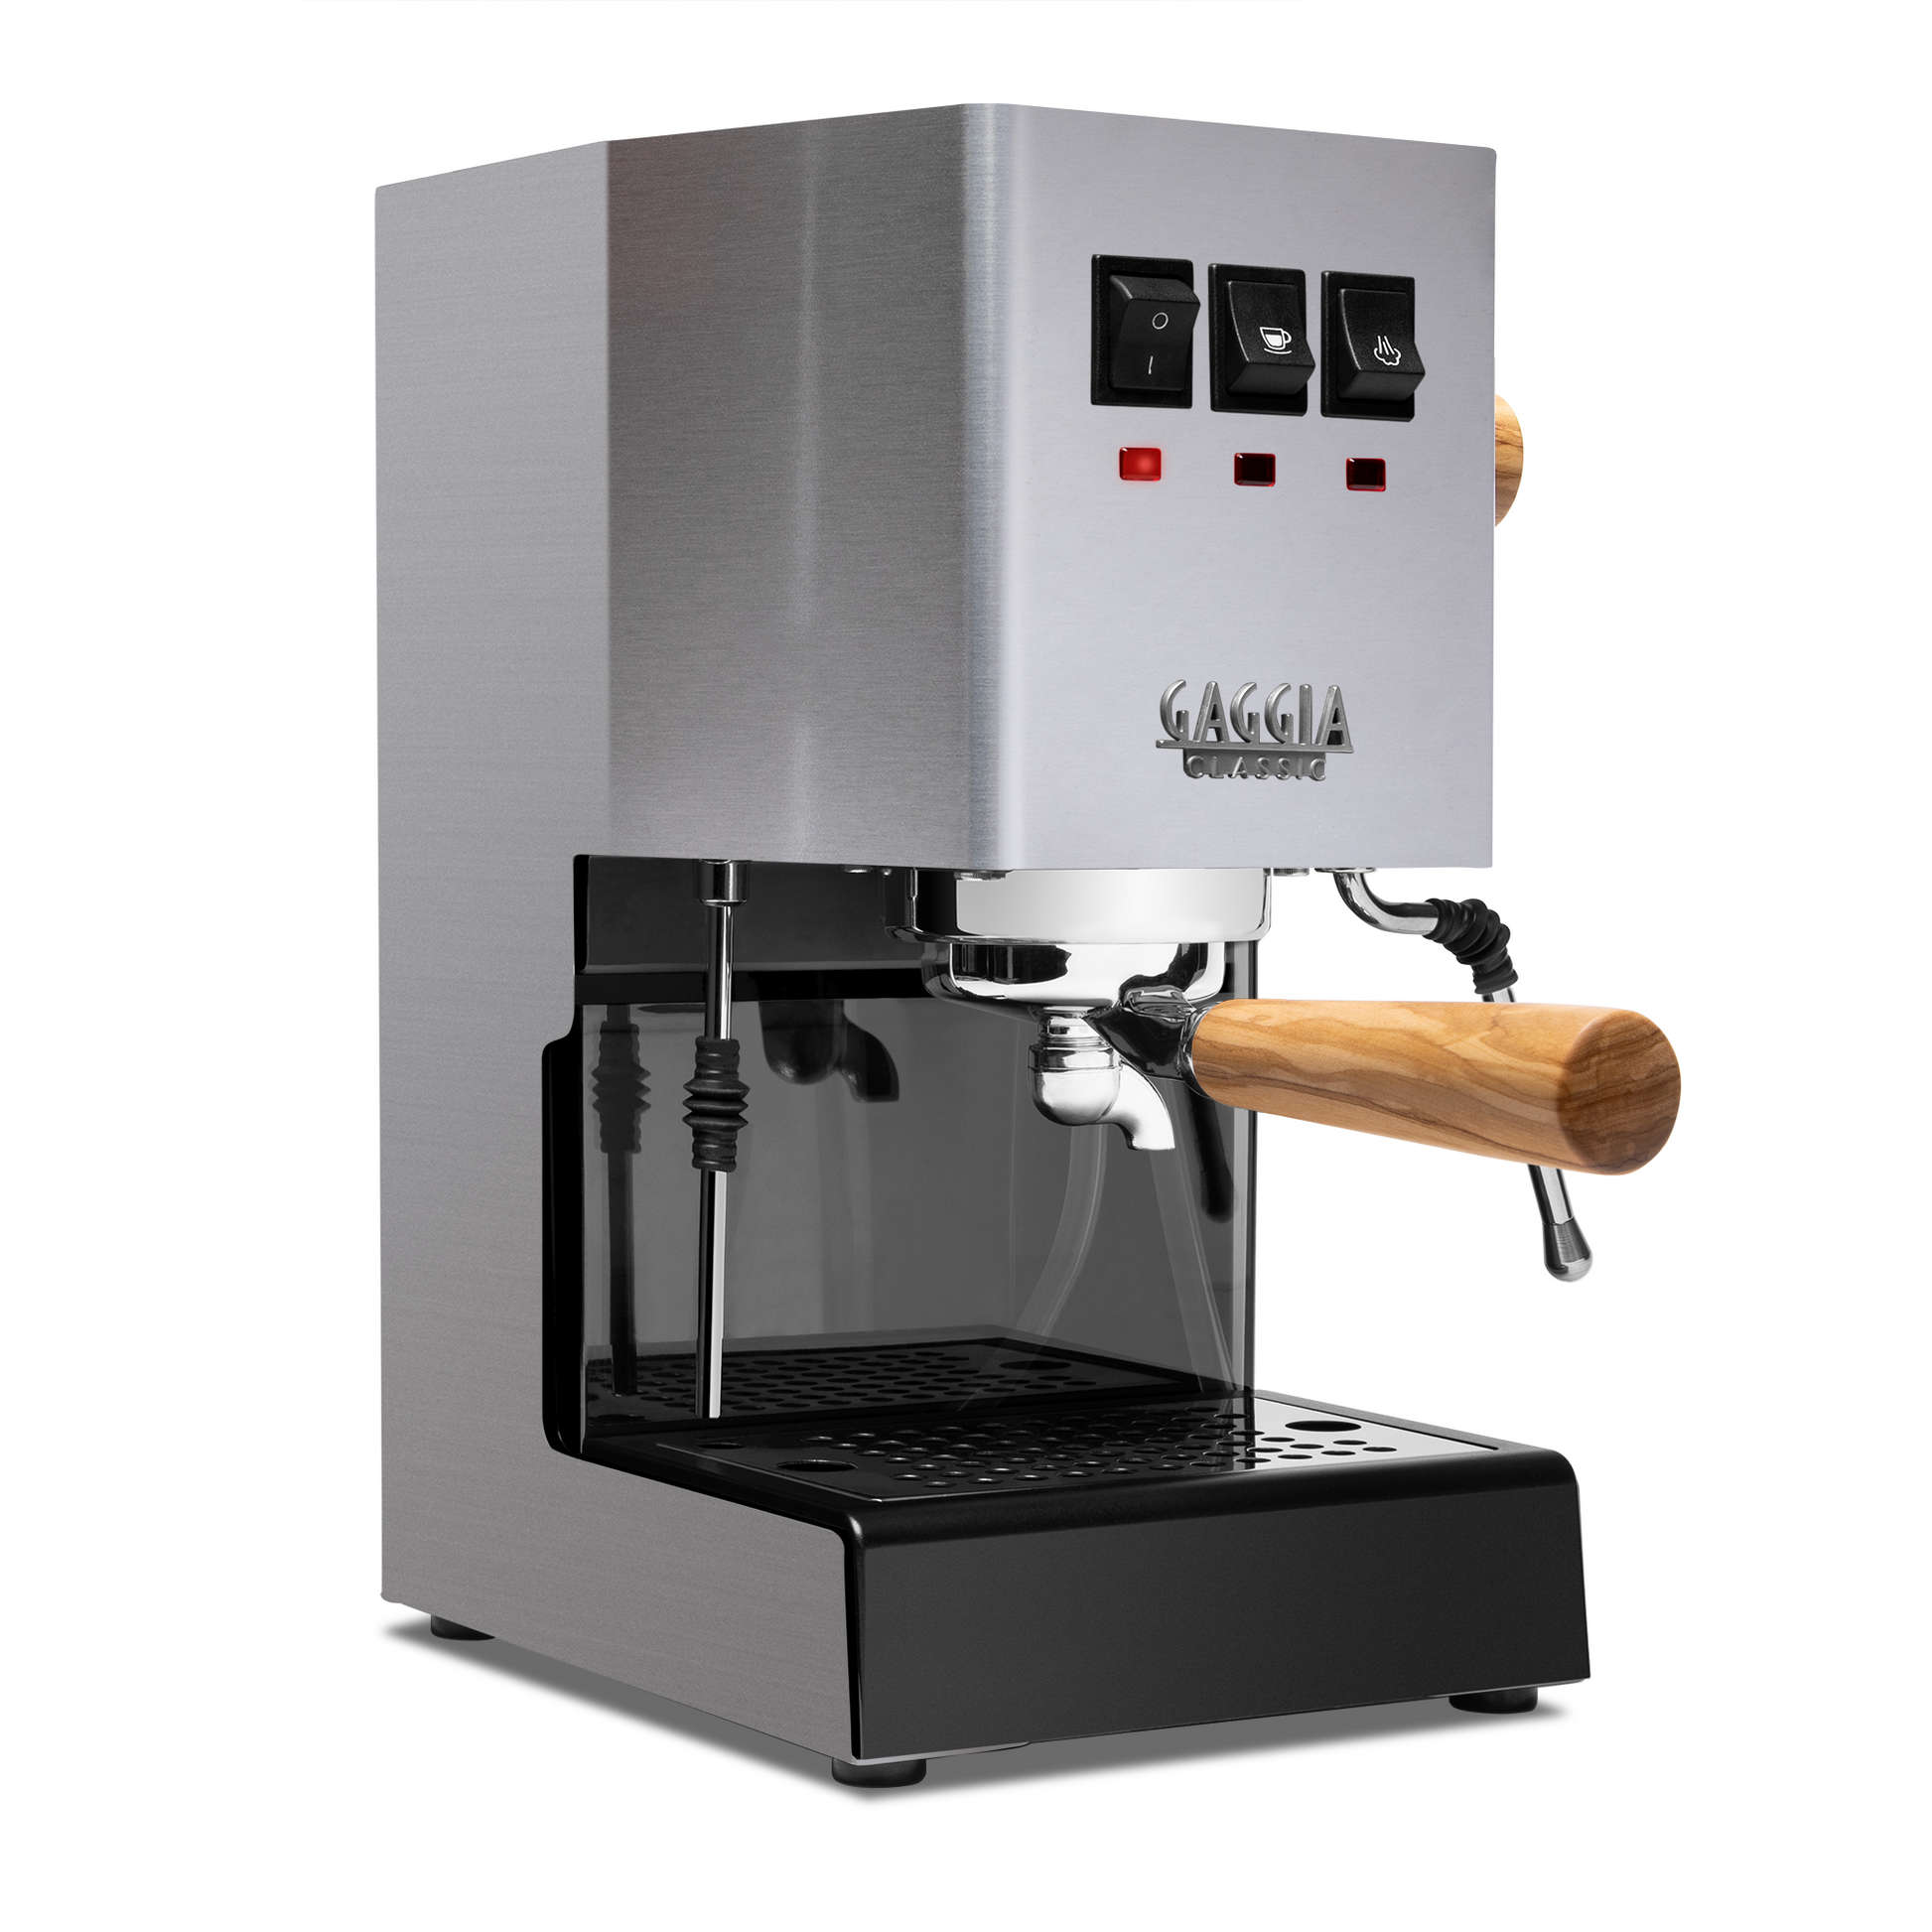 Gaggia Classic Pro Espresso Machine | Stainless Steel